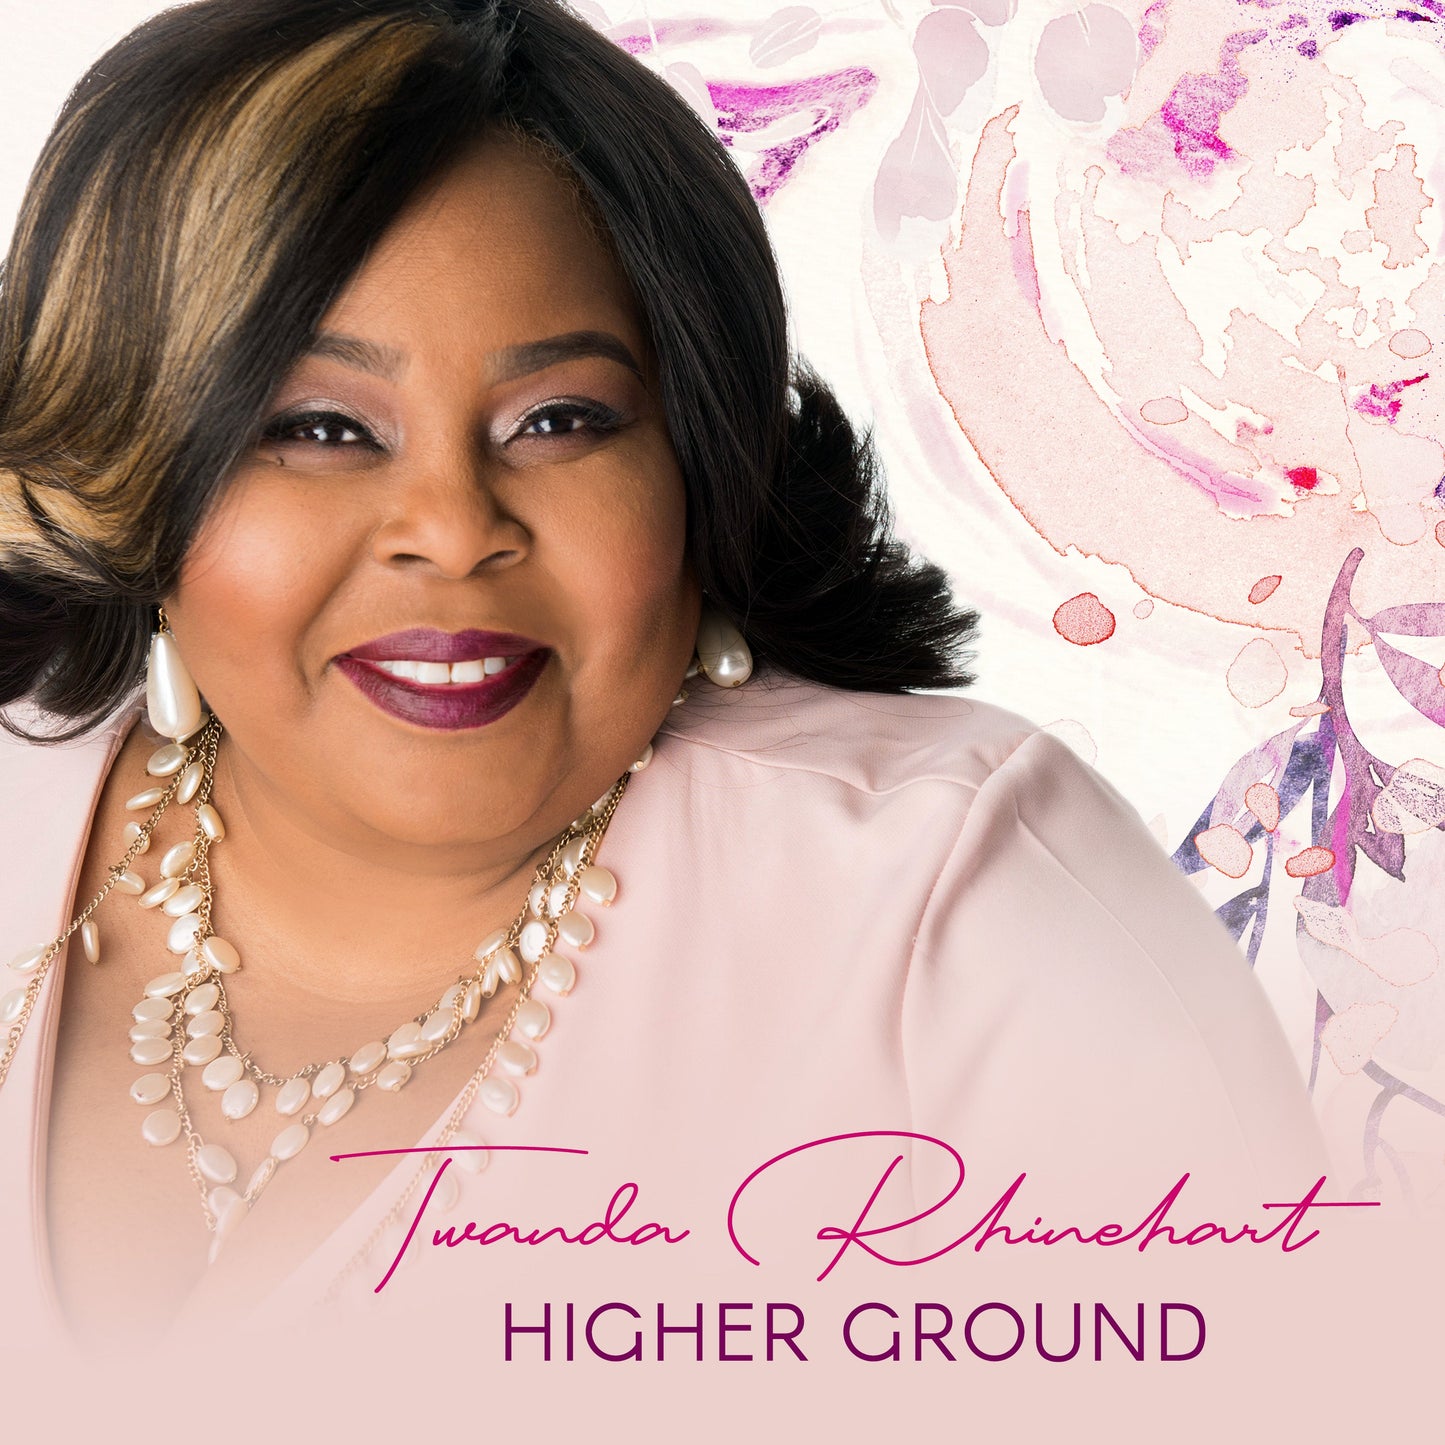 Higher Ground by Twanda Rhinehart (Digital Download)